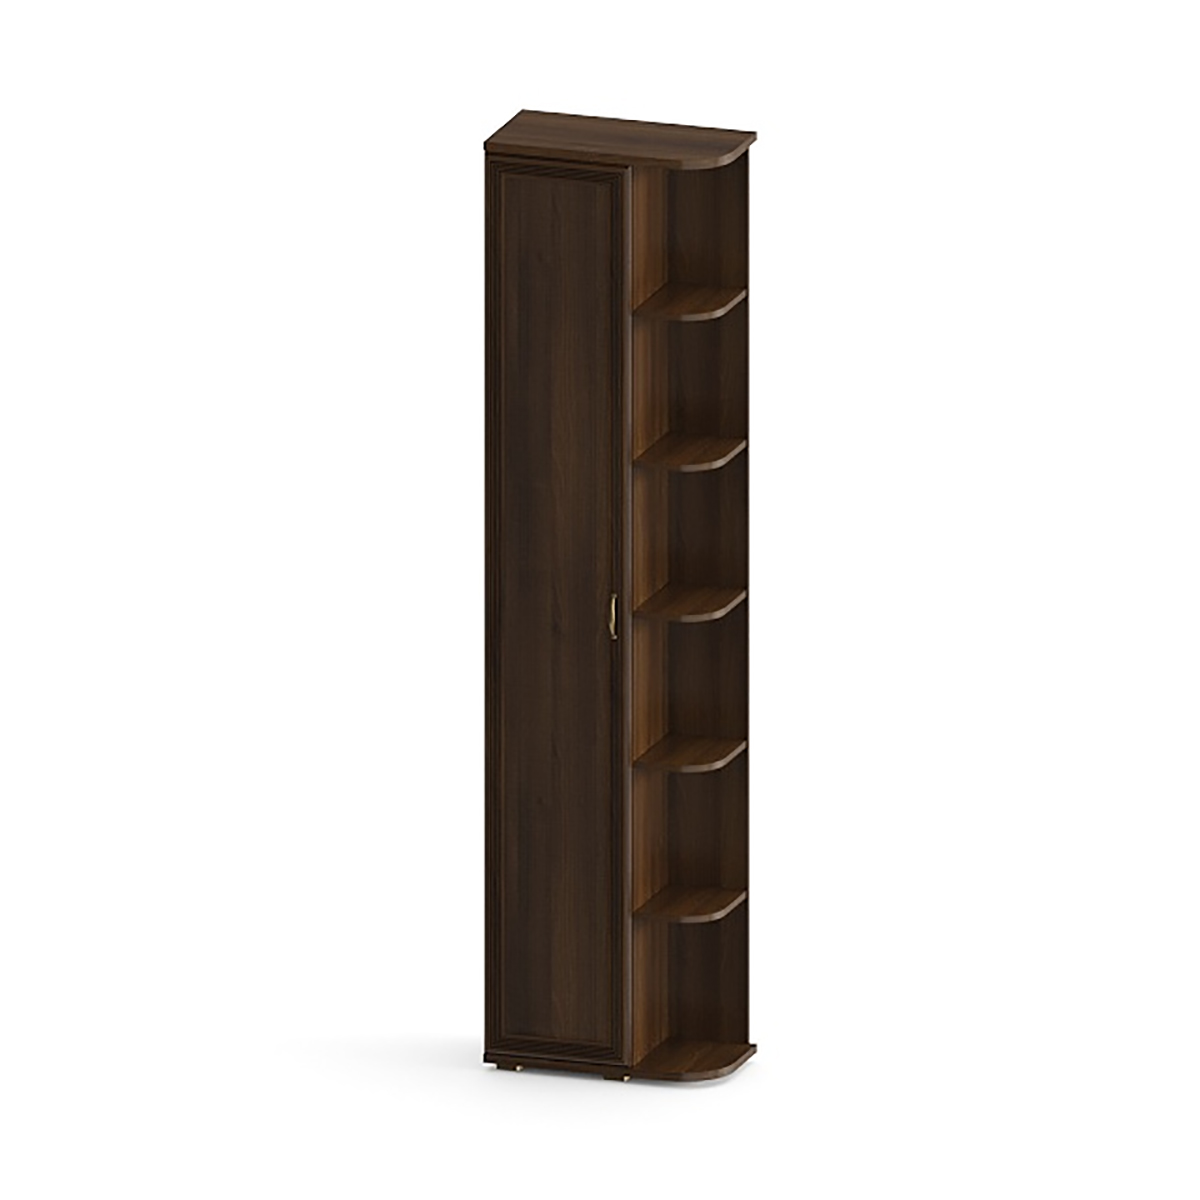 ШК-1025 шкаф многоцелевой для мебели серии Карина